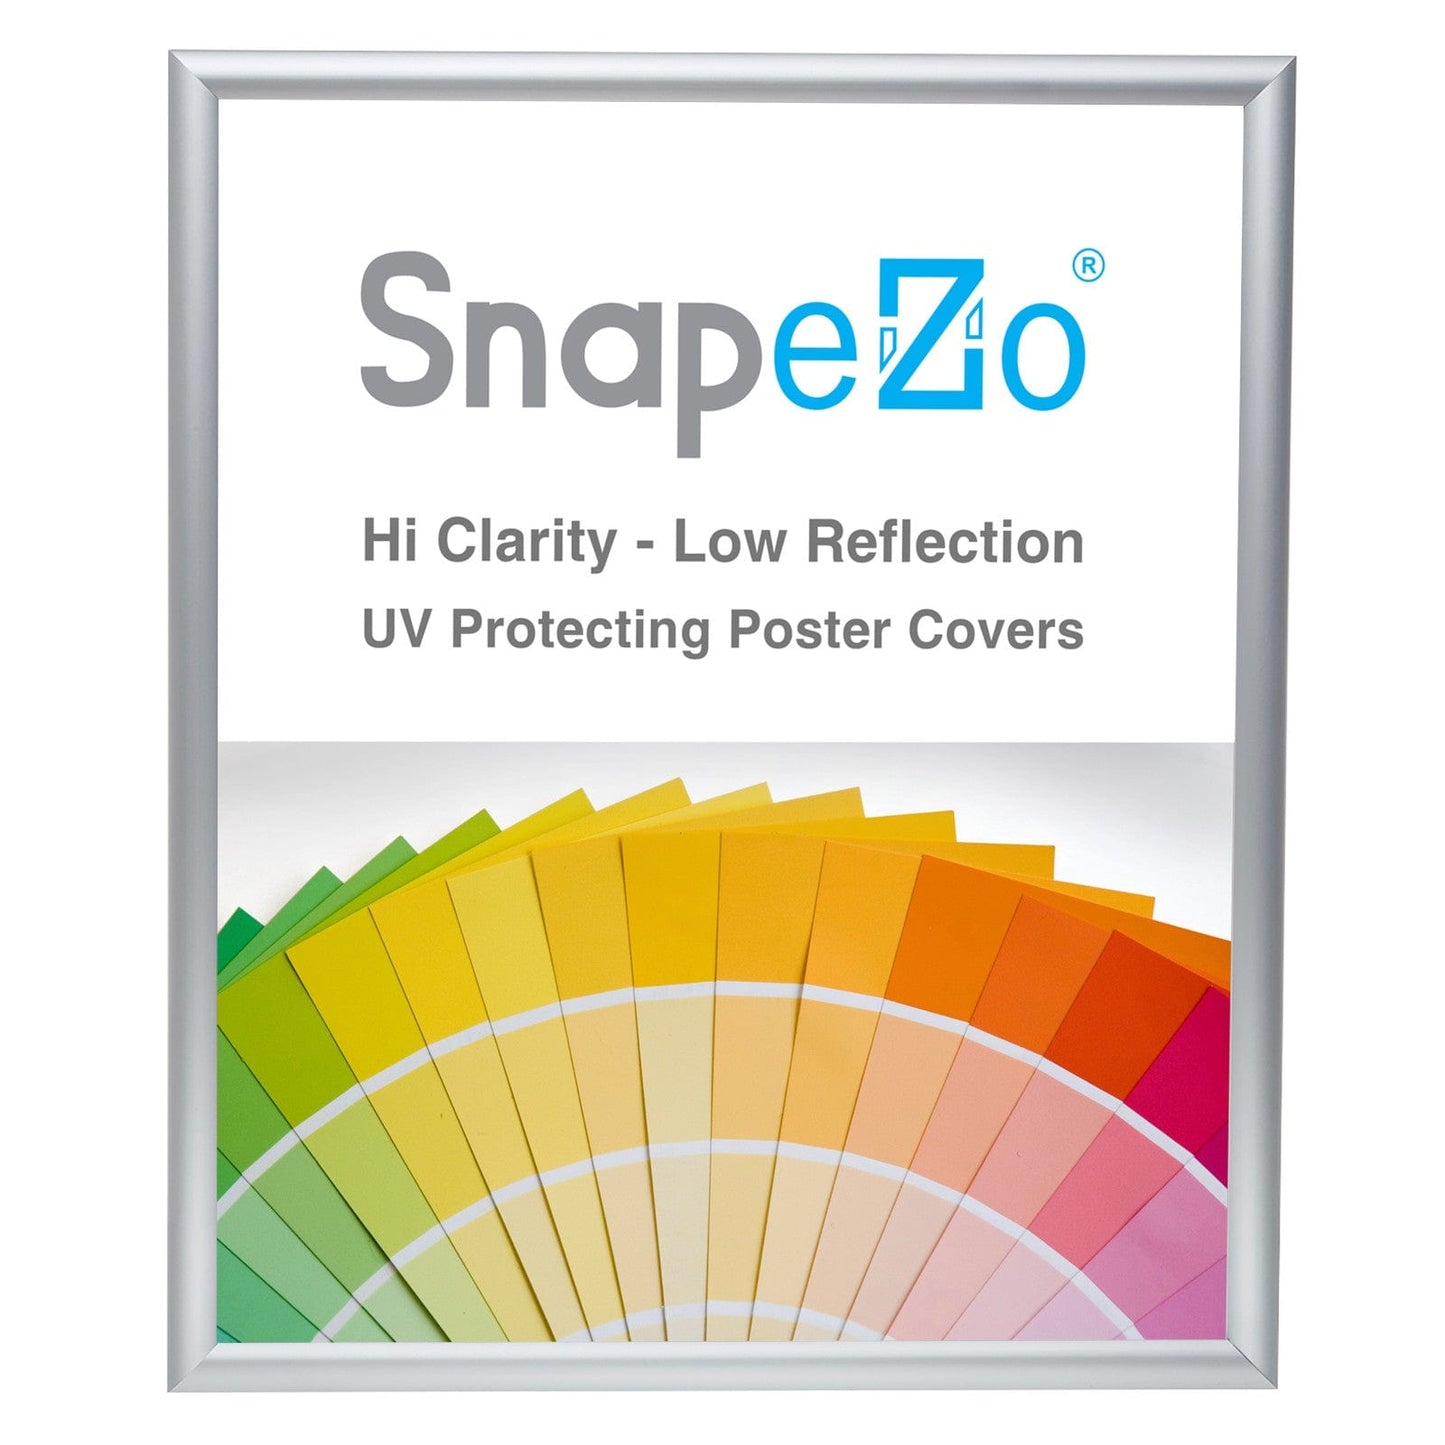 20x24 Silver SnapeZo® Snap Frame - 1" Profile - Snap Frames Direct